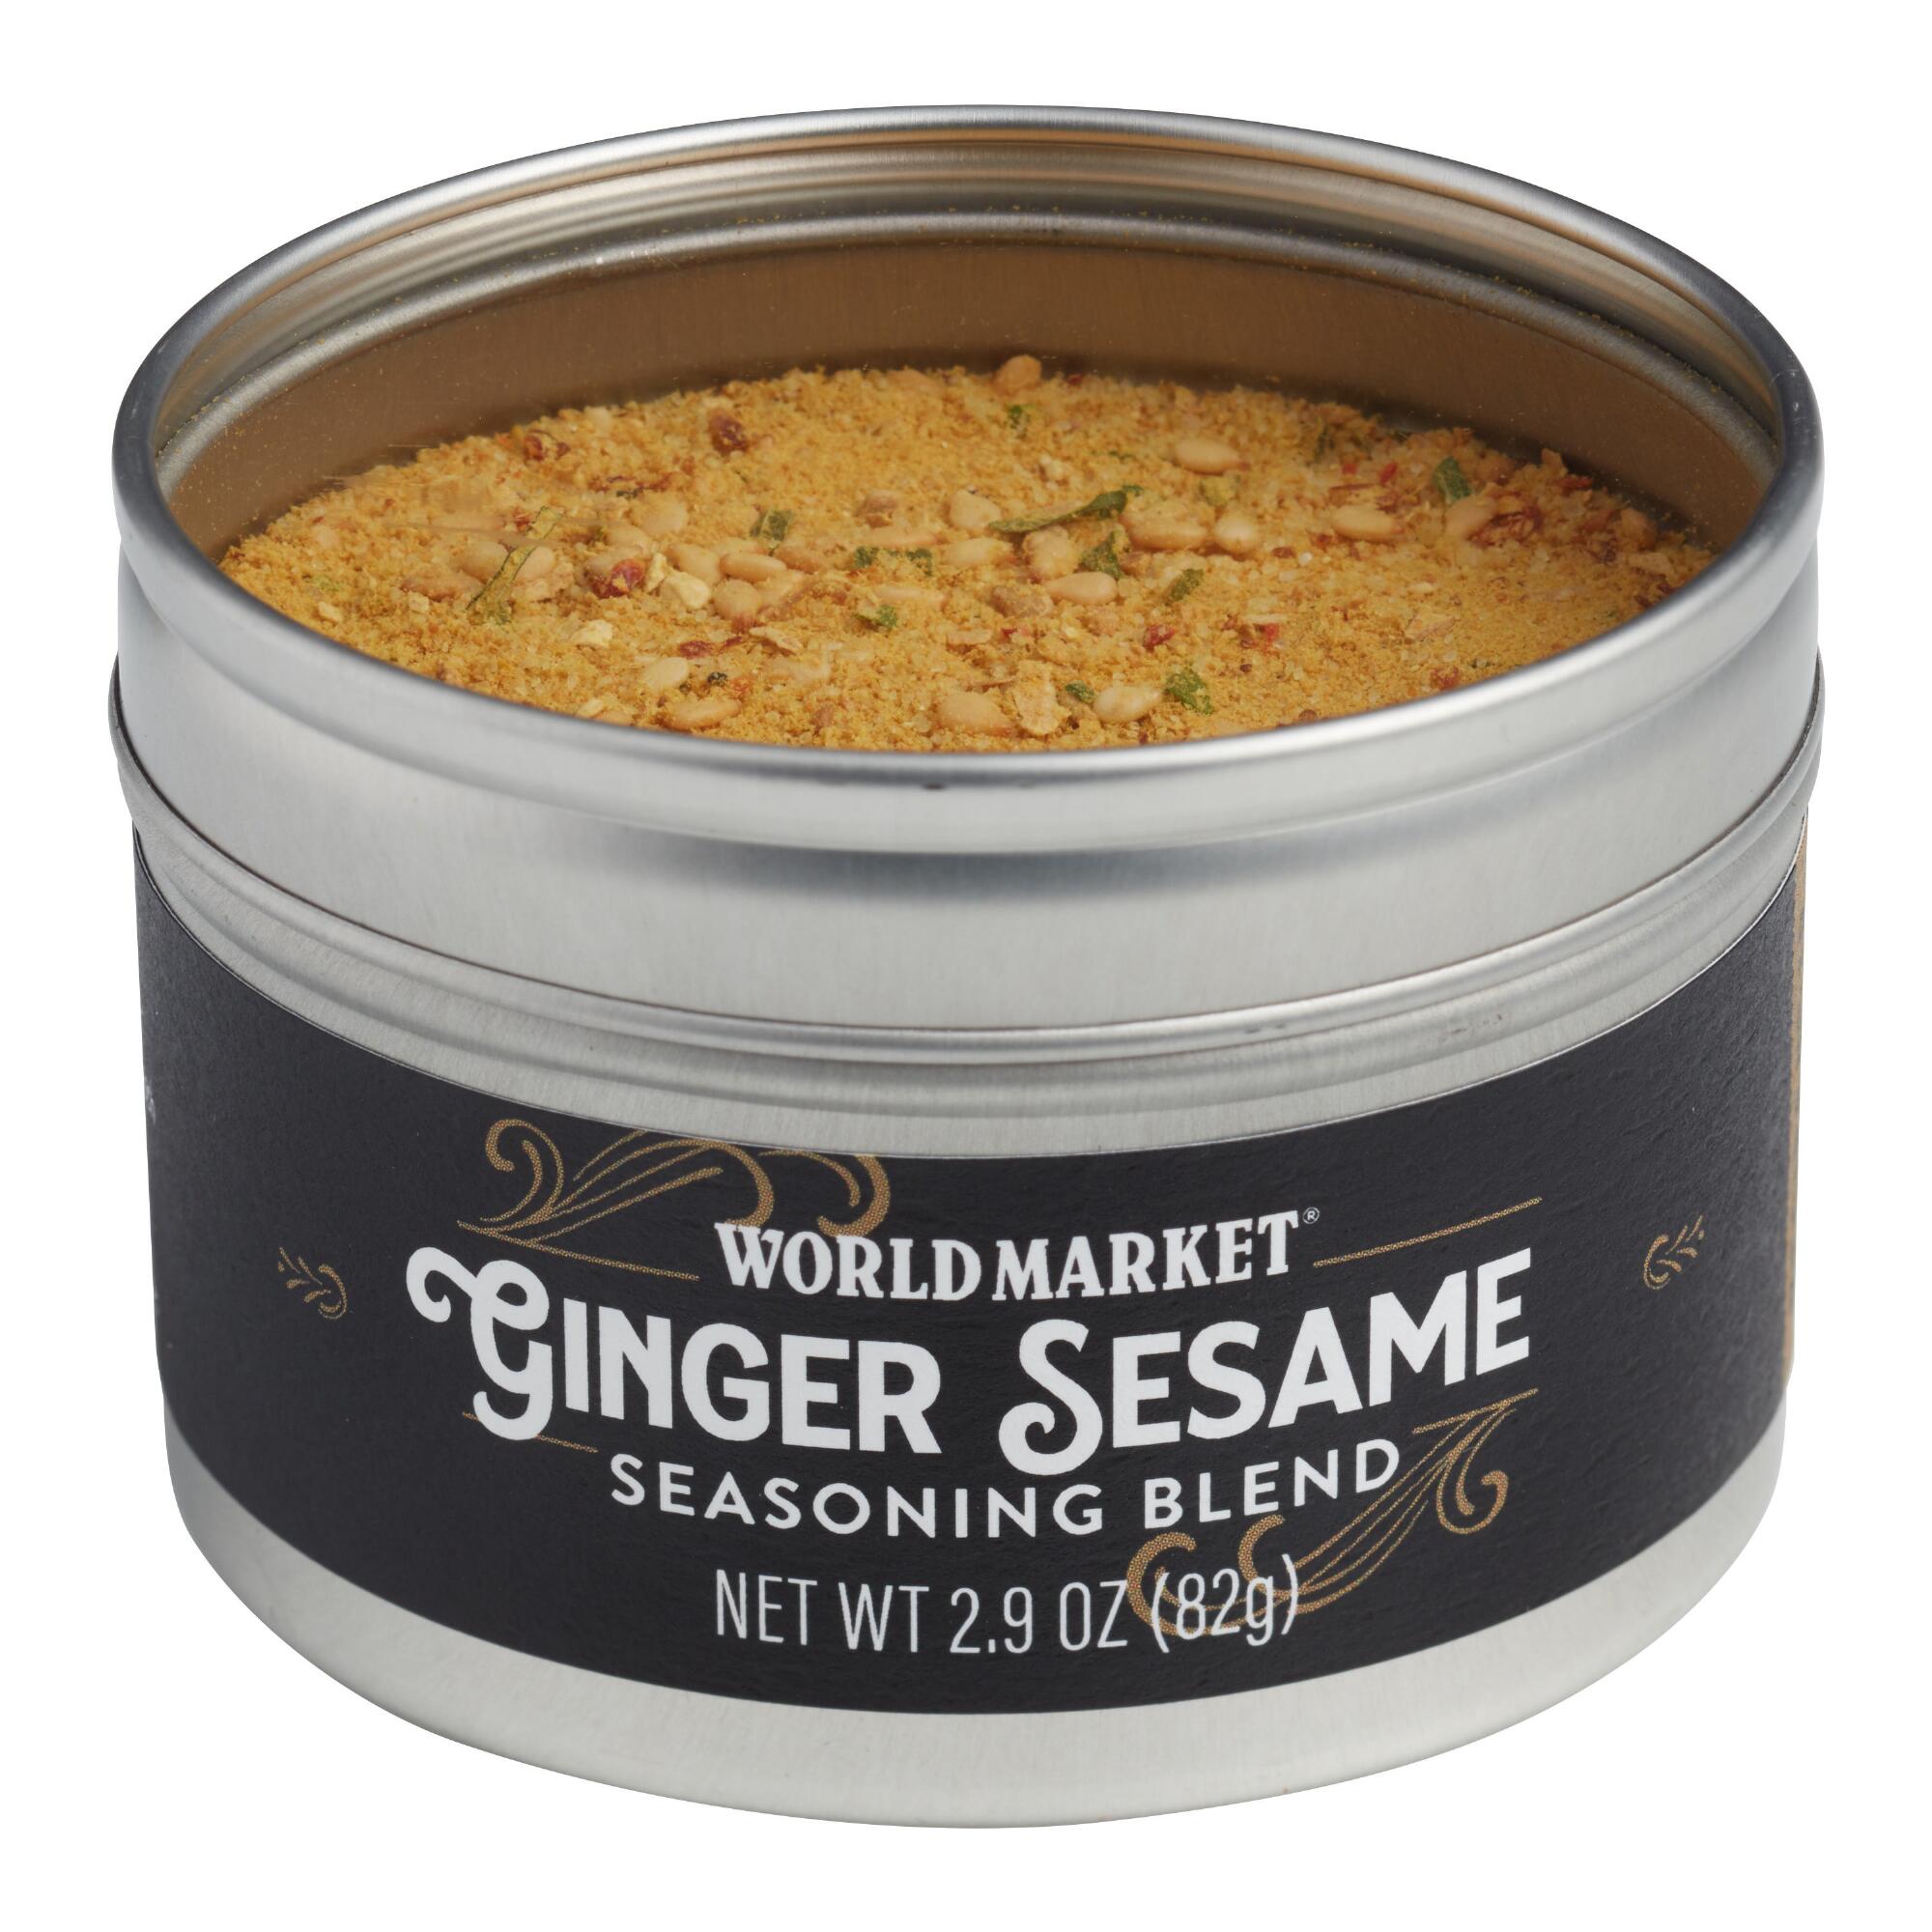 World Market Ginger Sesame Spice Blend by World Market